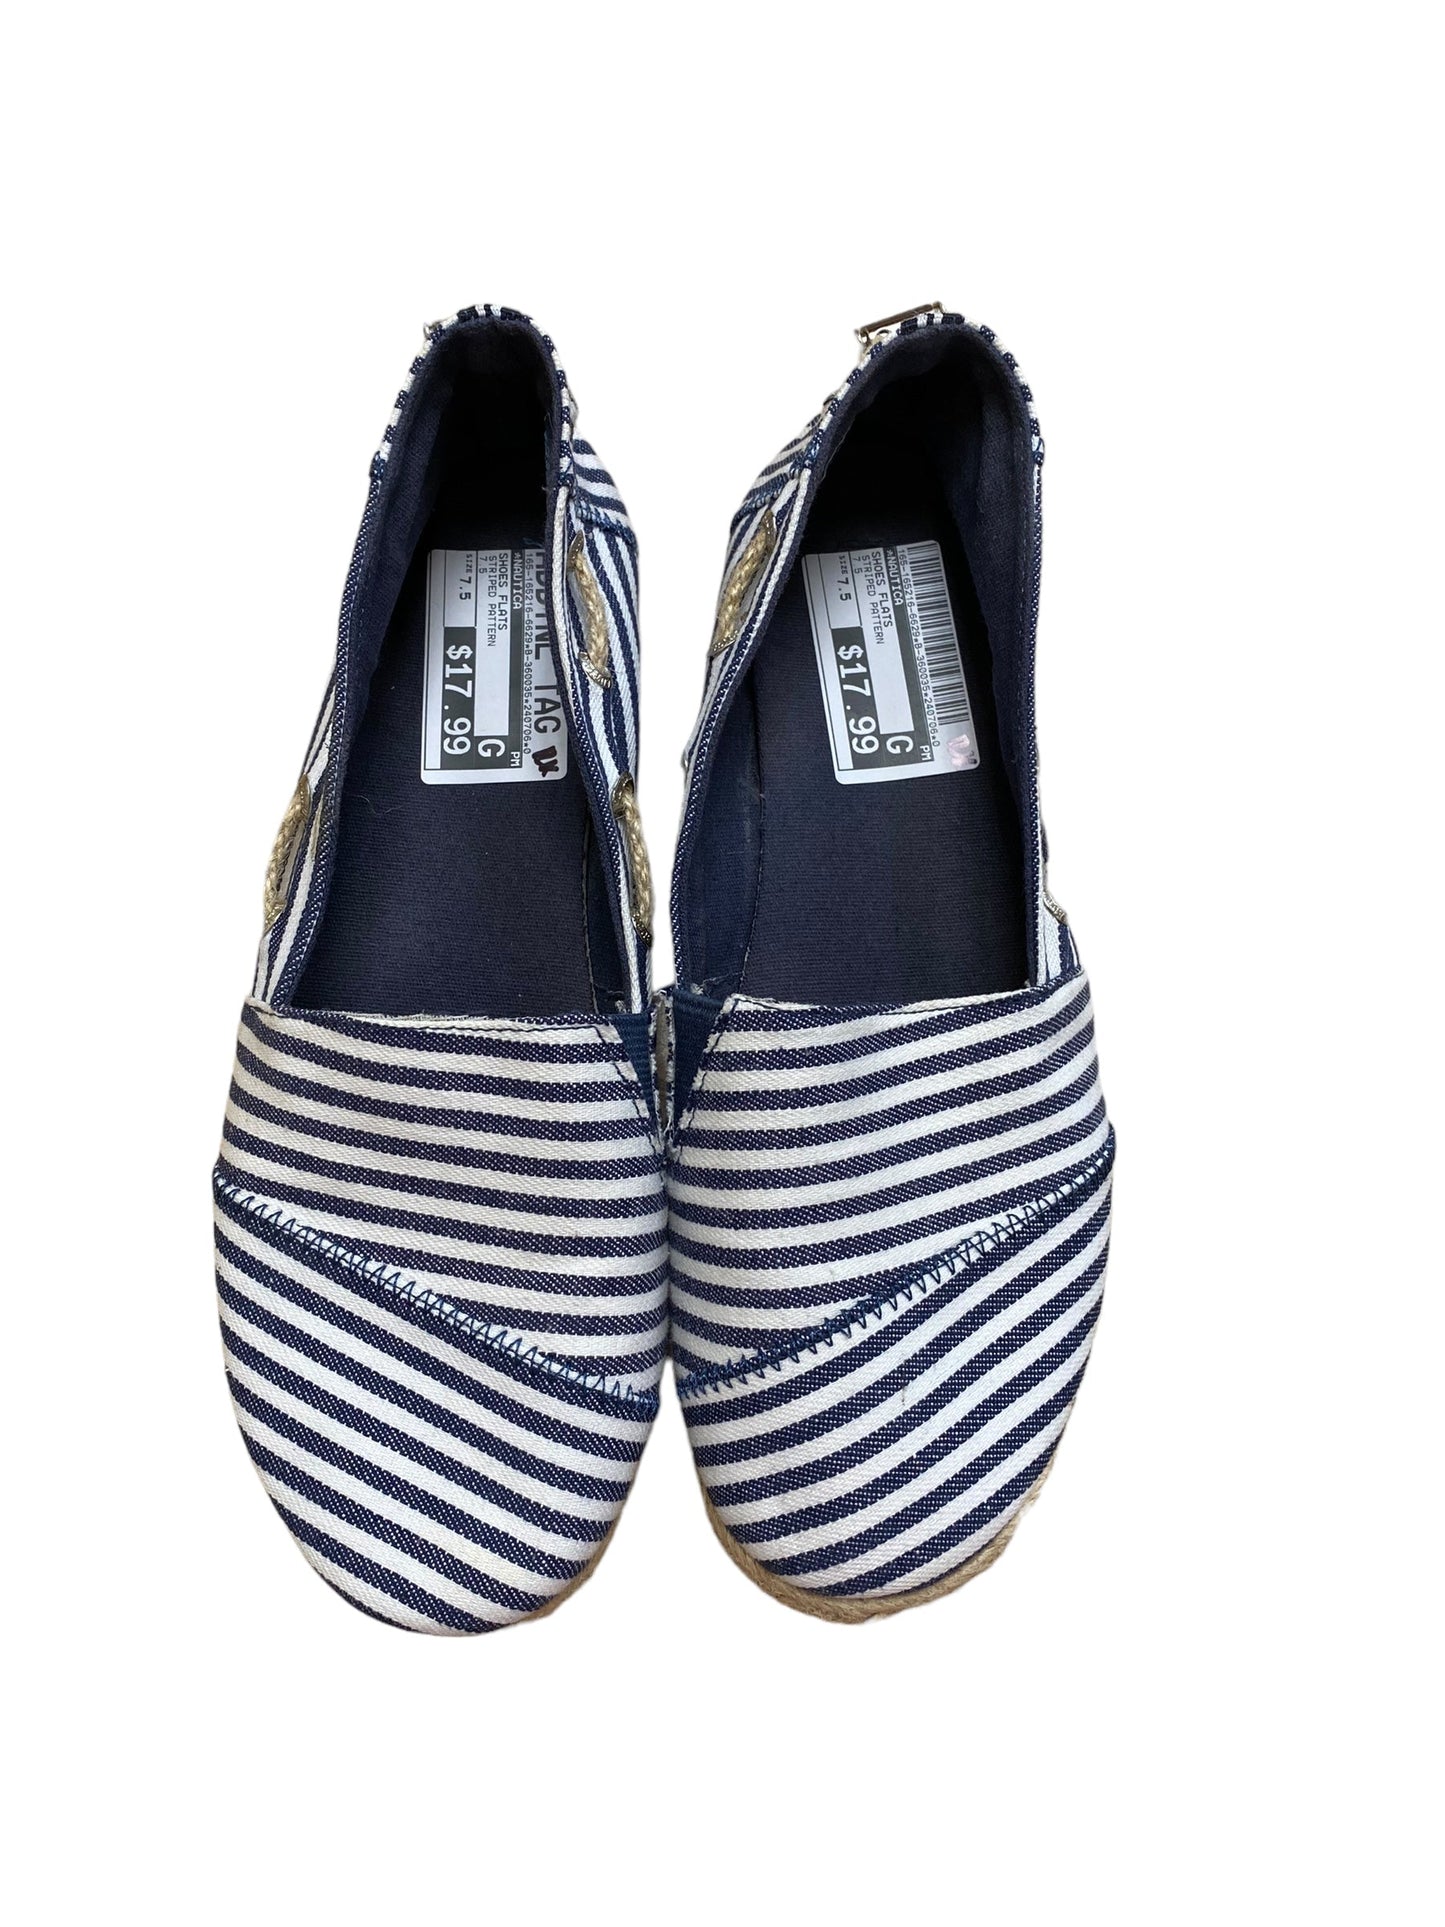 Striped Pattern Shoes Flats Nautica, Size 7.5